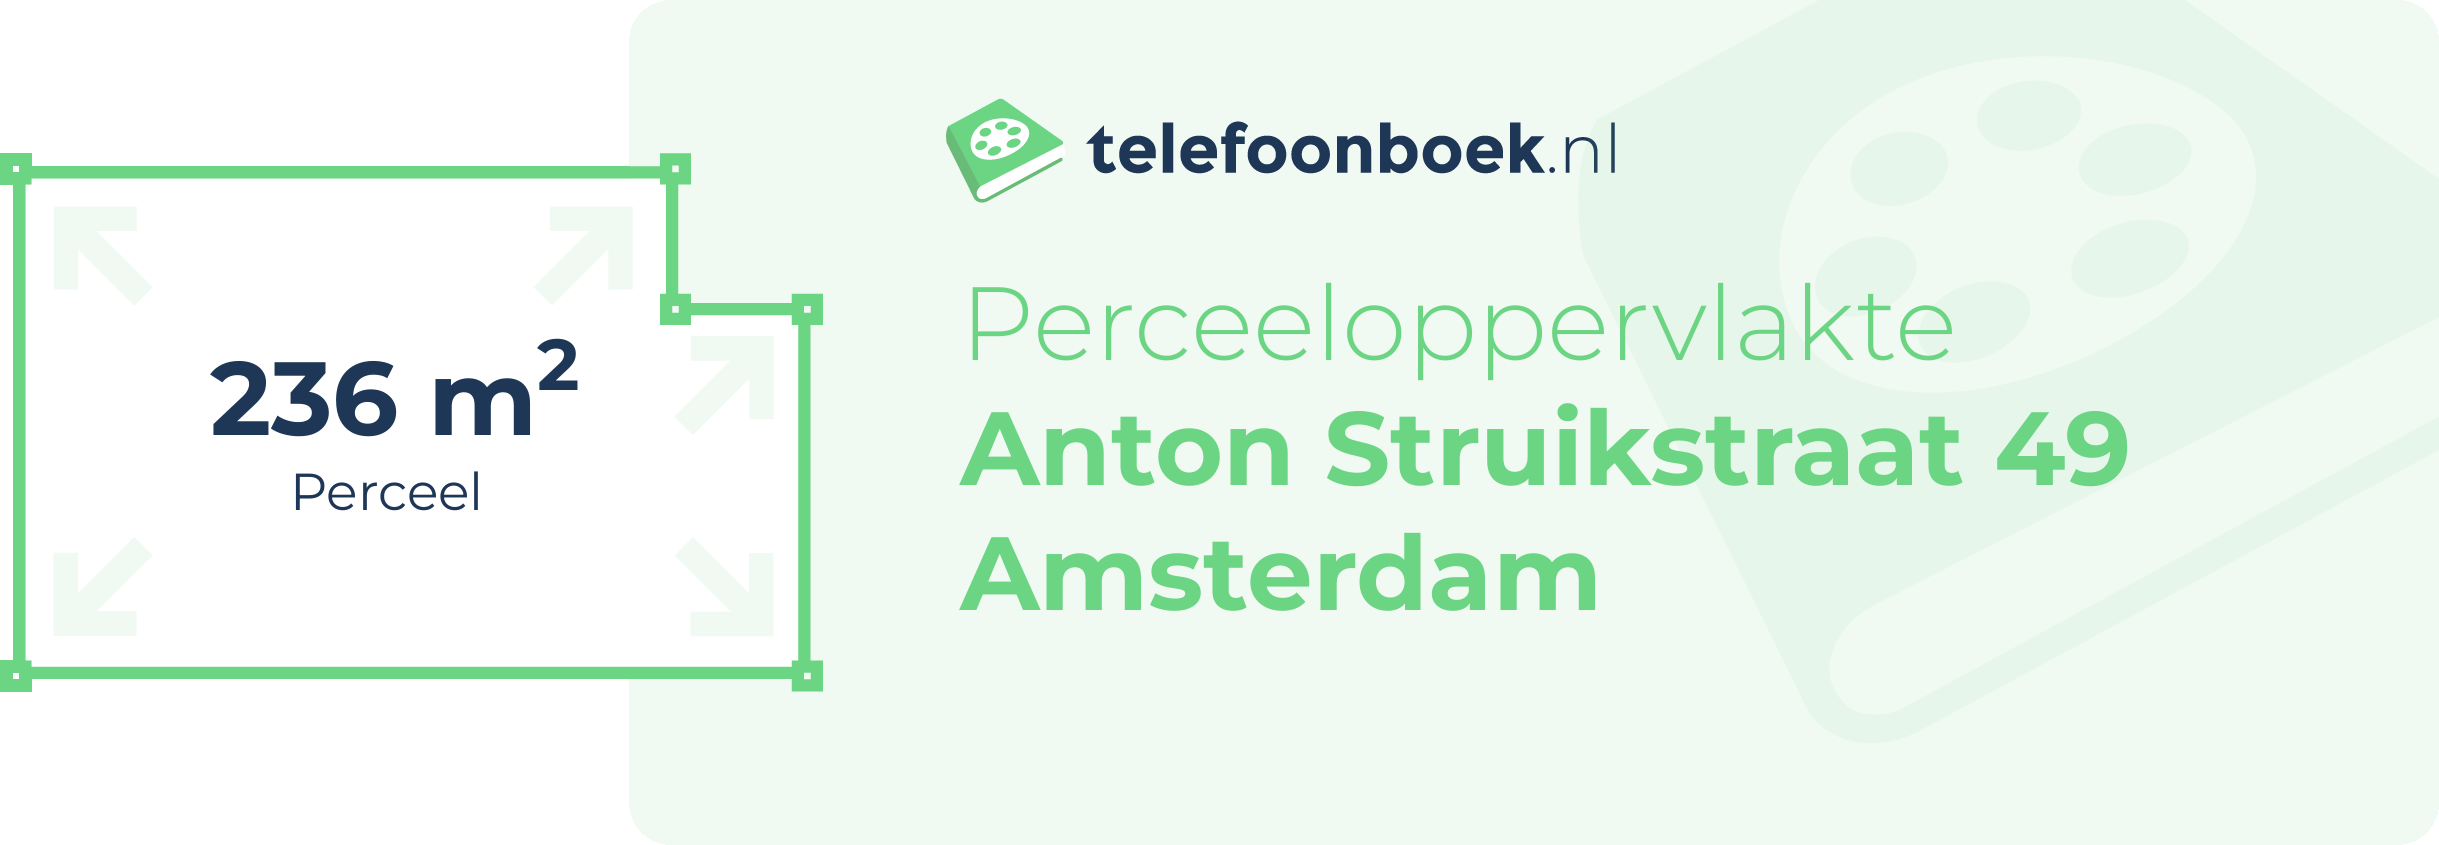 Perceeloppervlakte Anton Struikstraat 49 Amsterdam